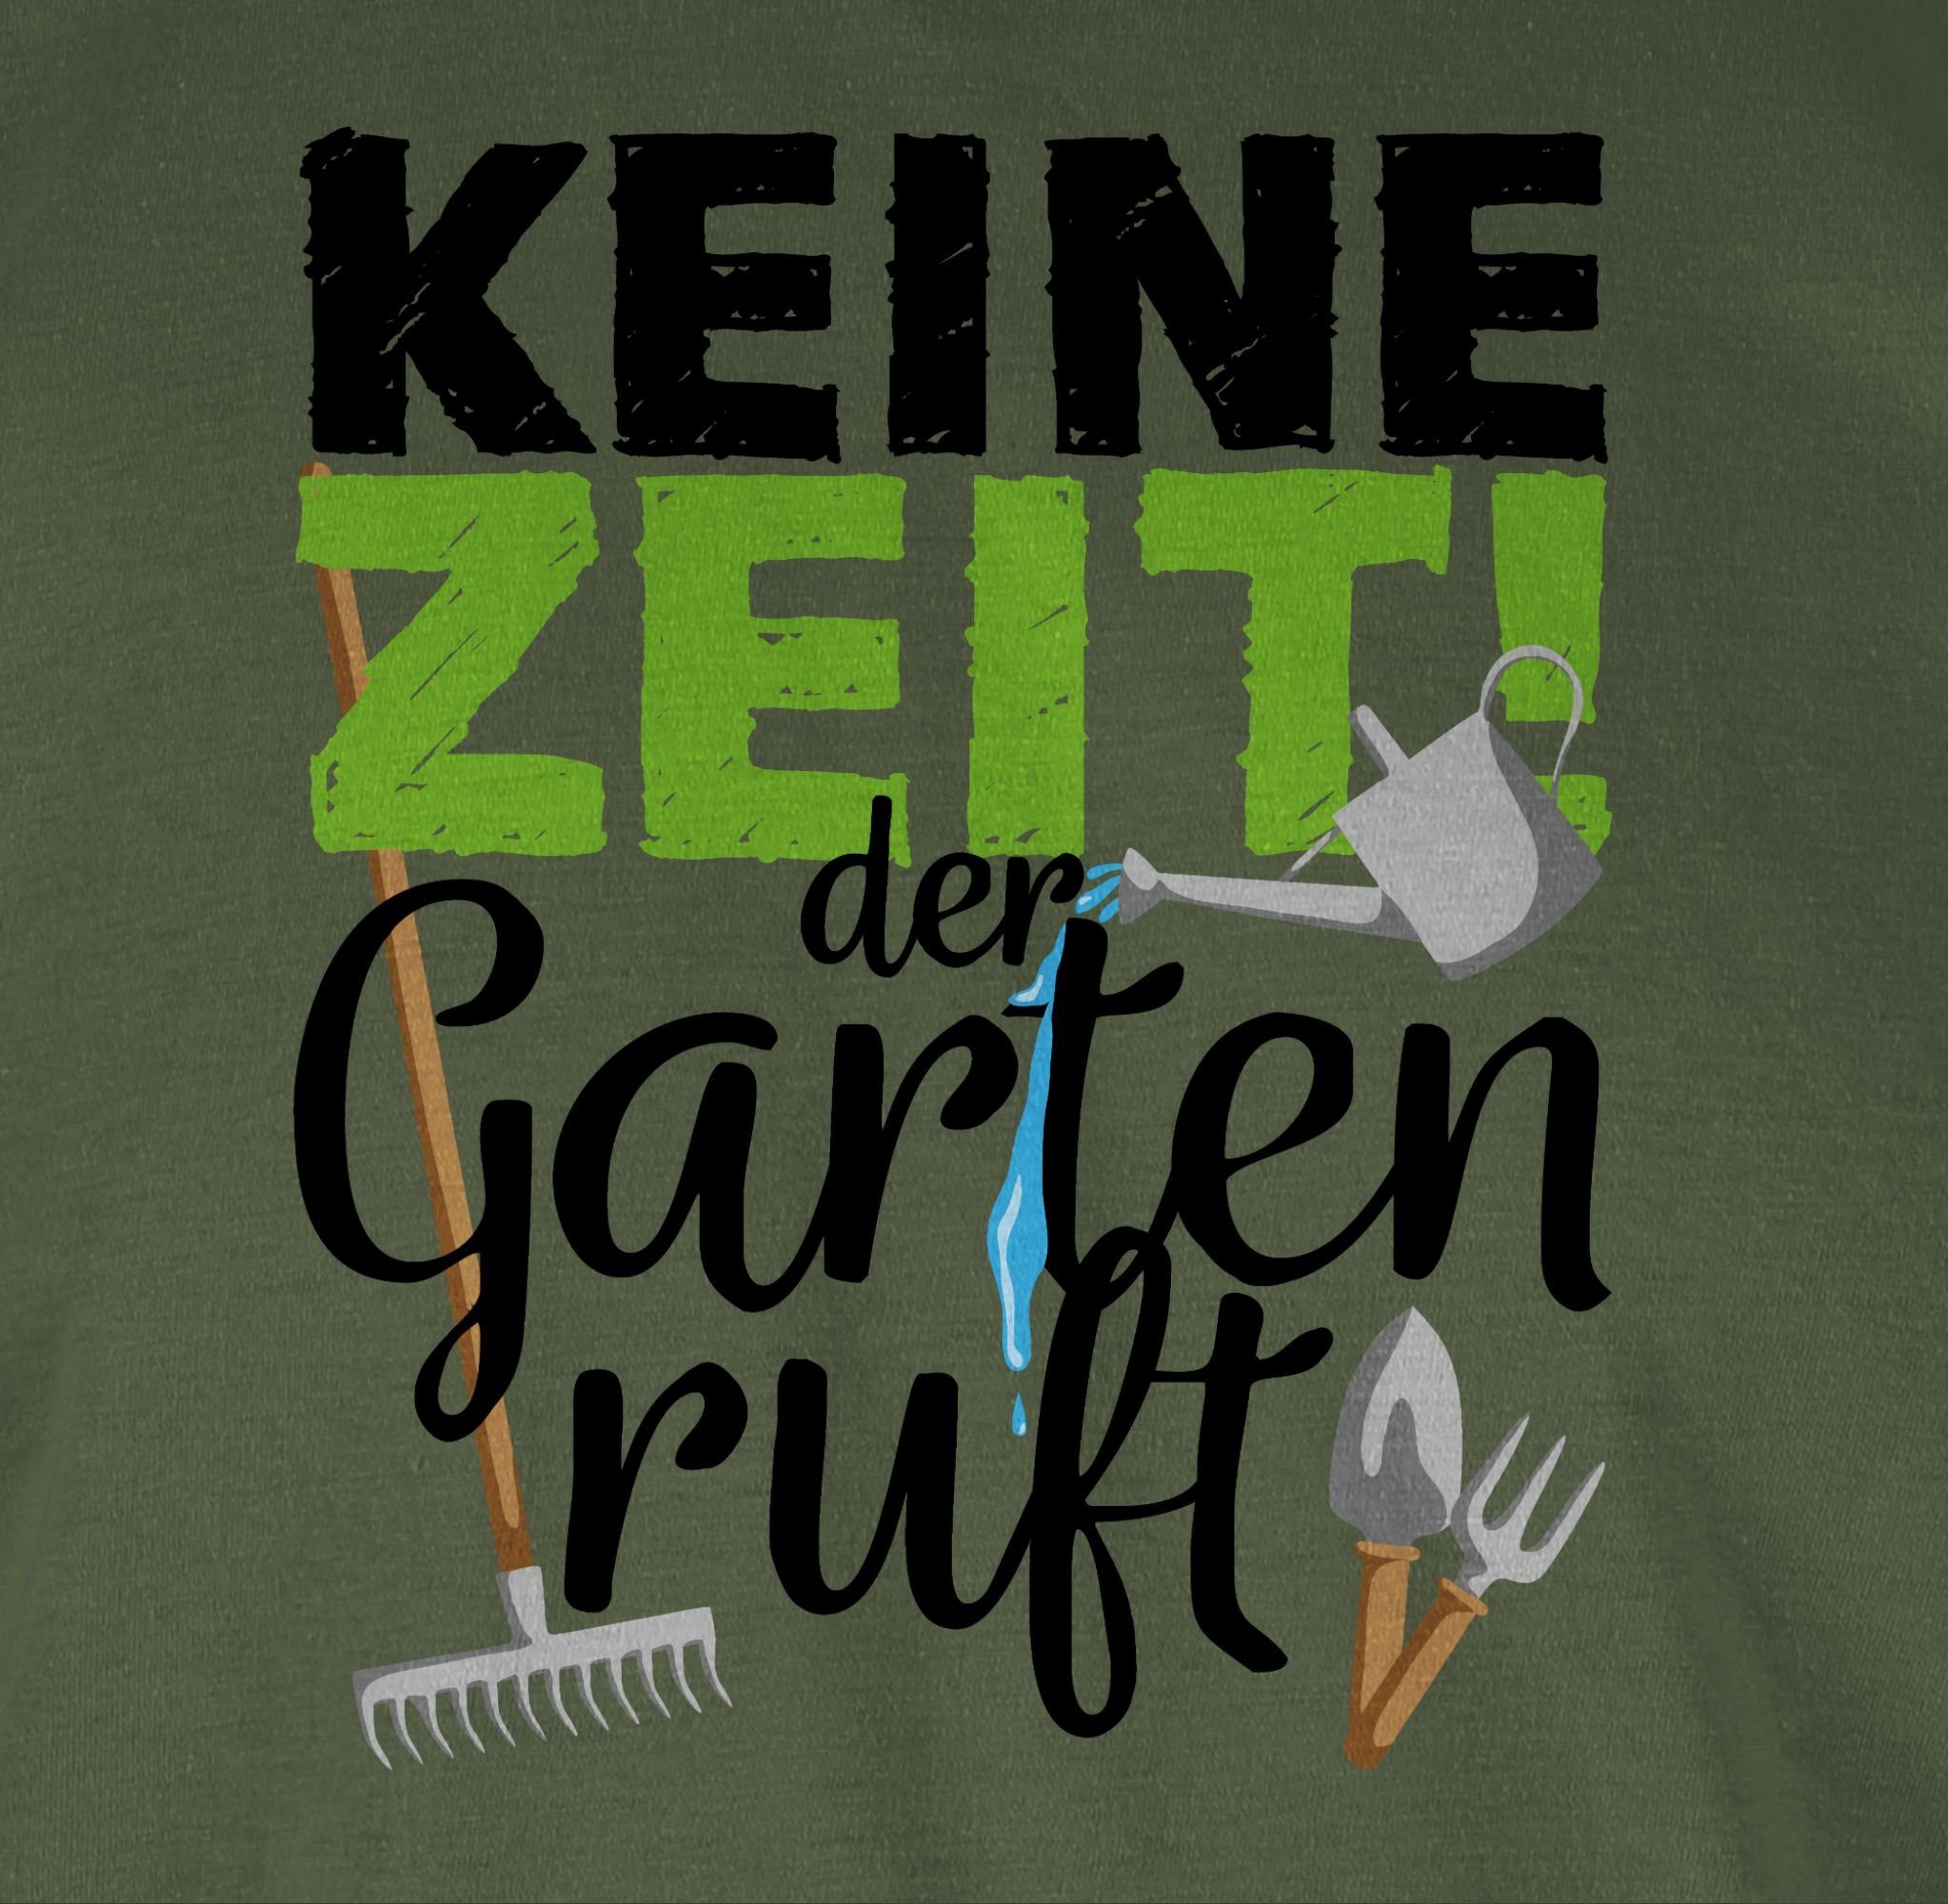 Shirtracer Army Outfit Garten 1 ruft Keine - Zeit Grün Hobby Gartengeräte der T-Shirt